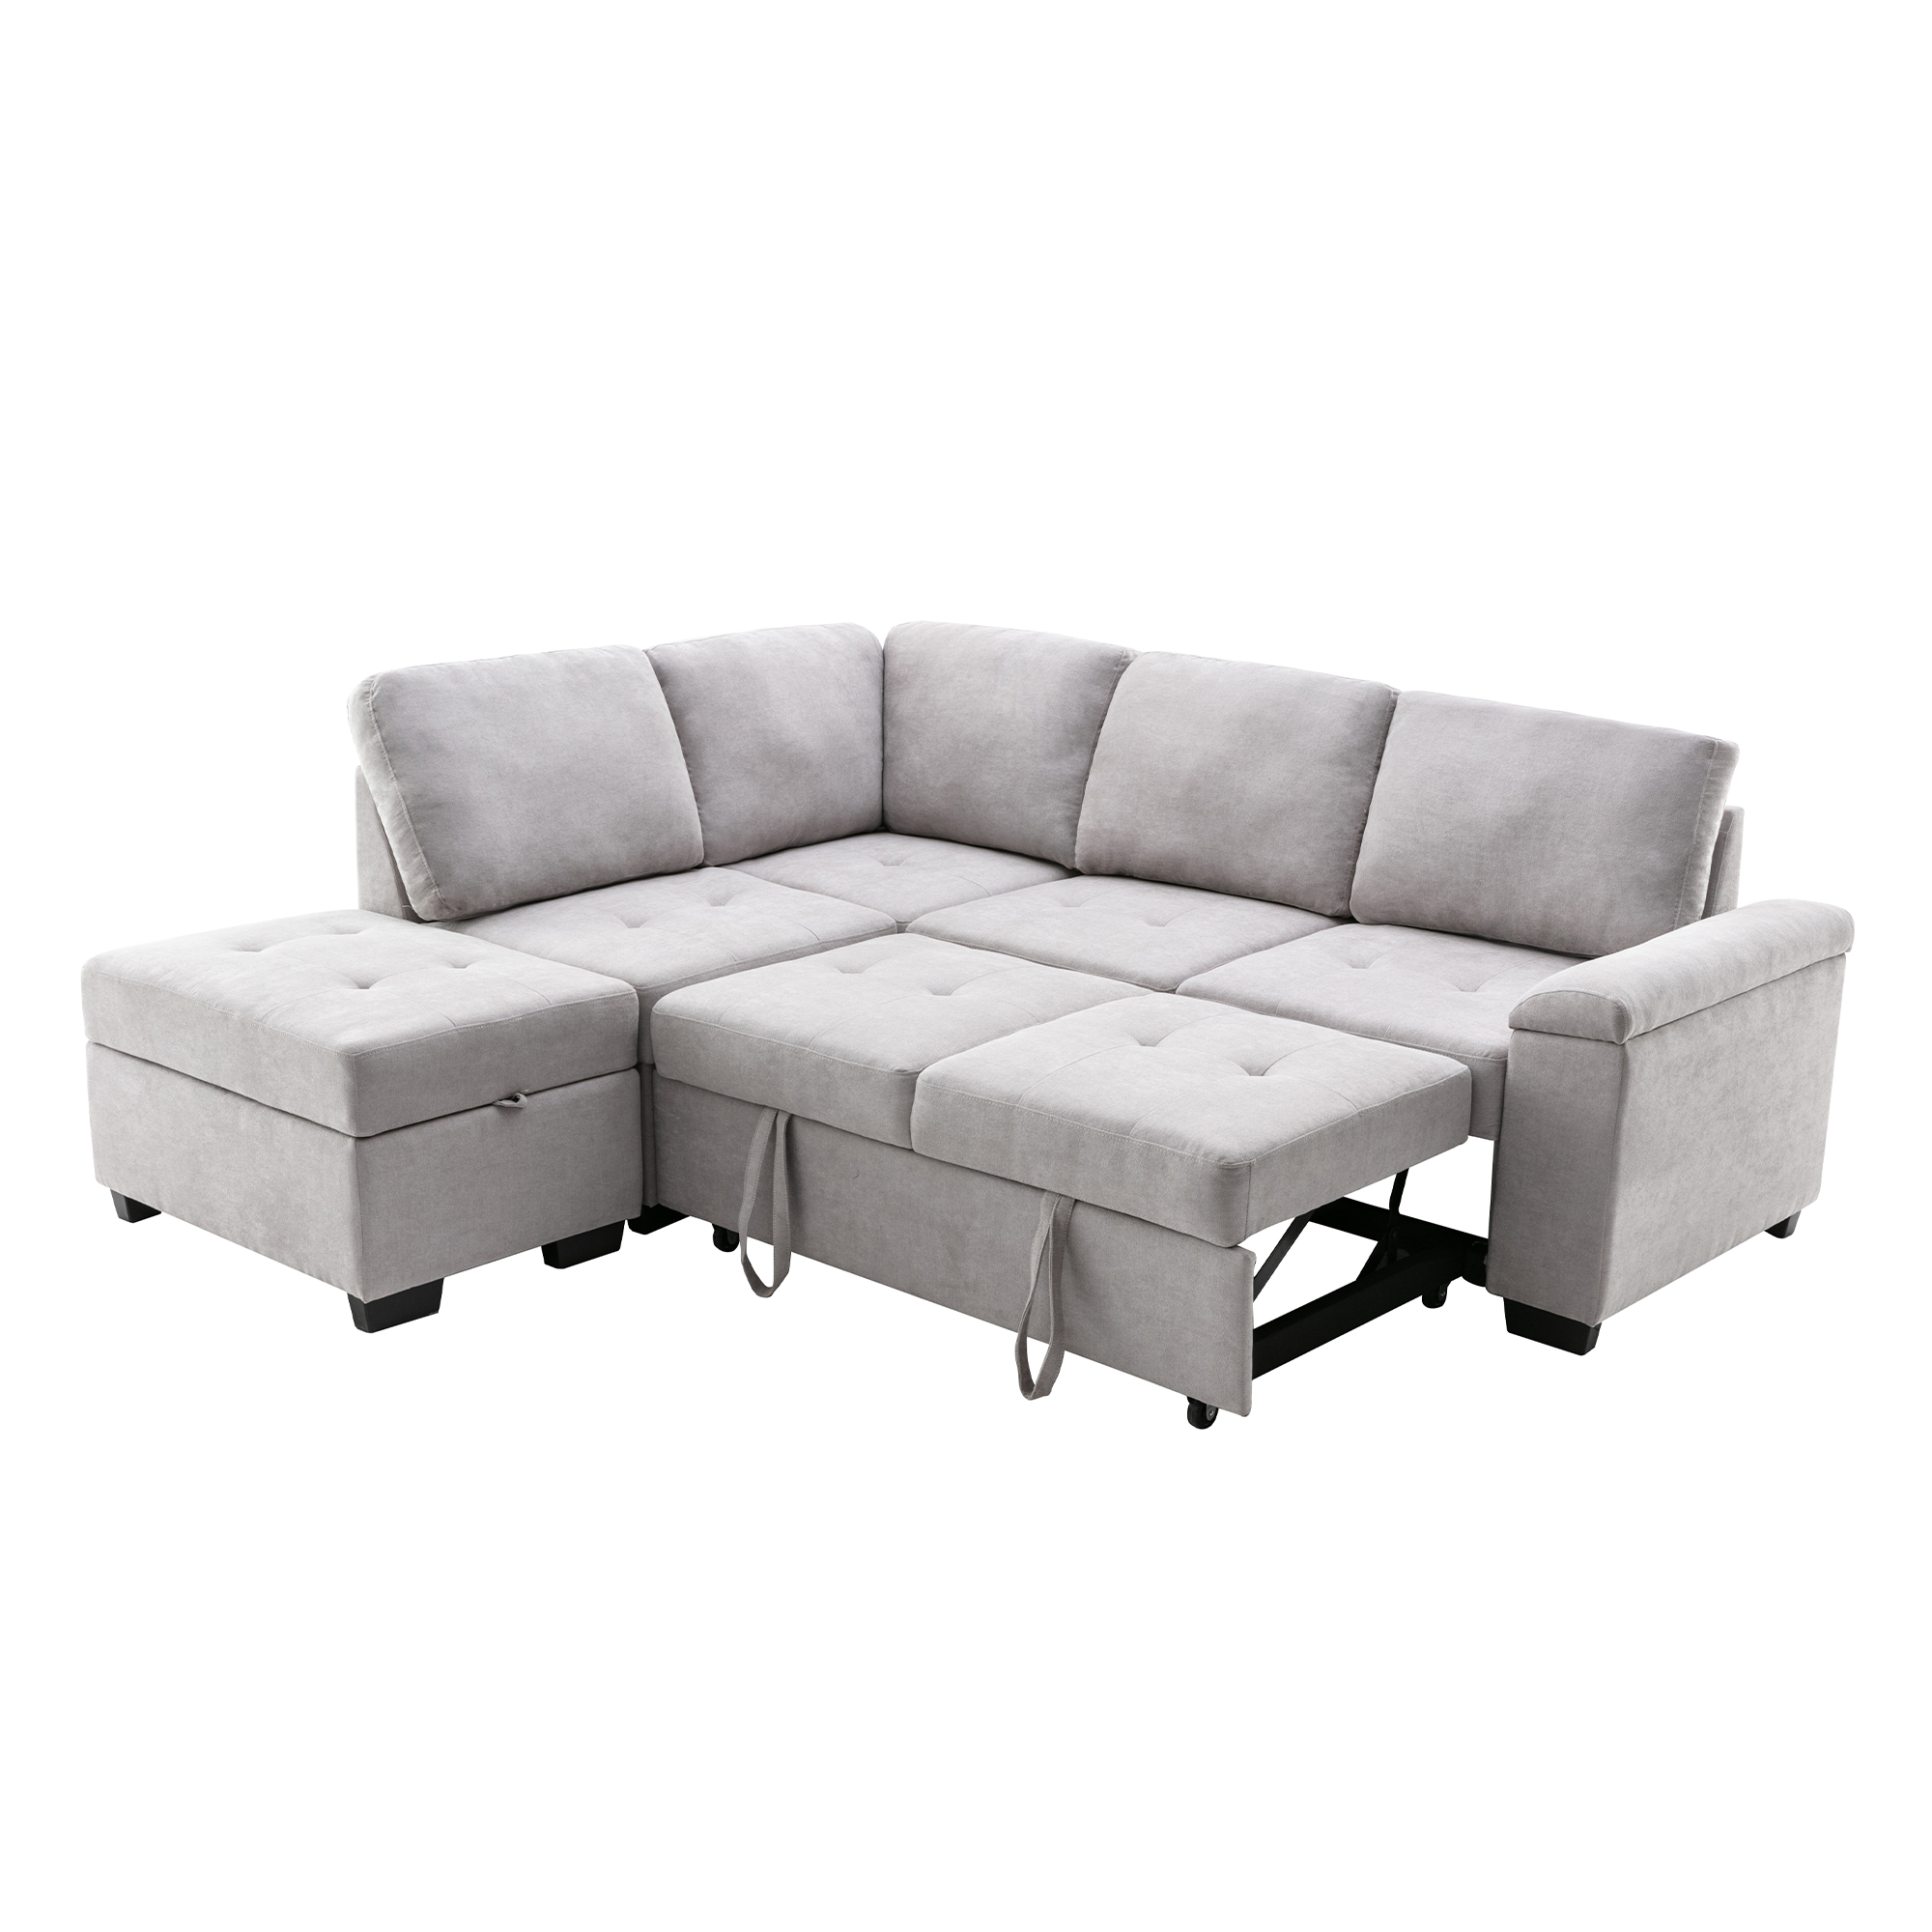 86" Sleeper Sectional Sofa with Ottoman, Gray